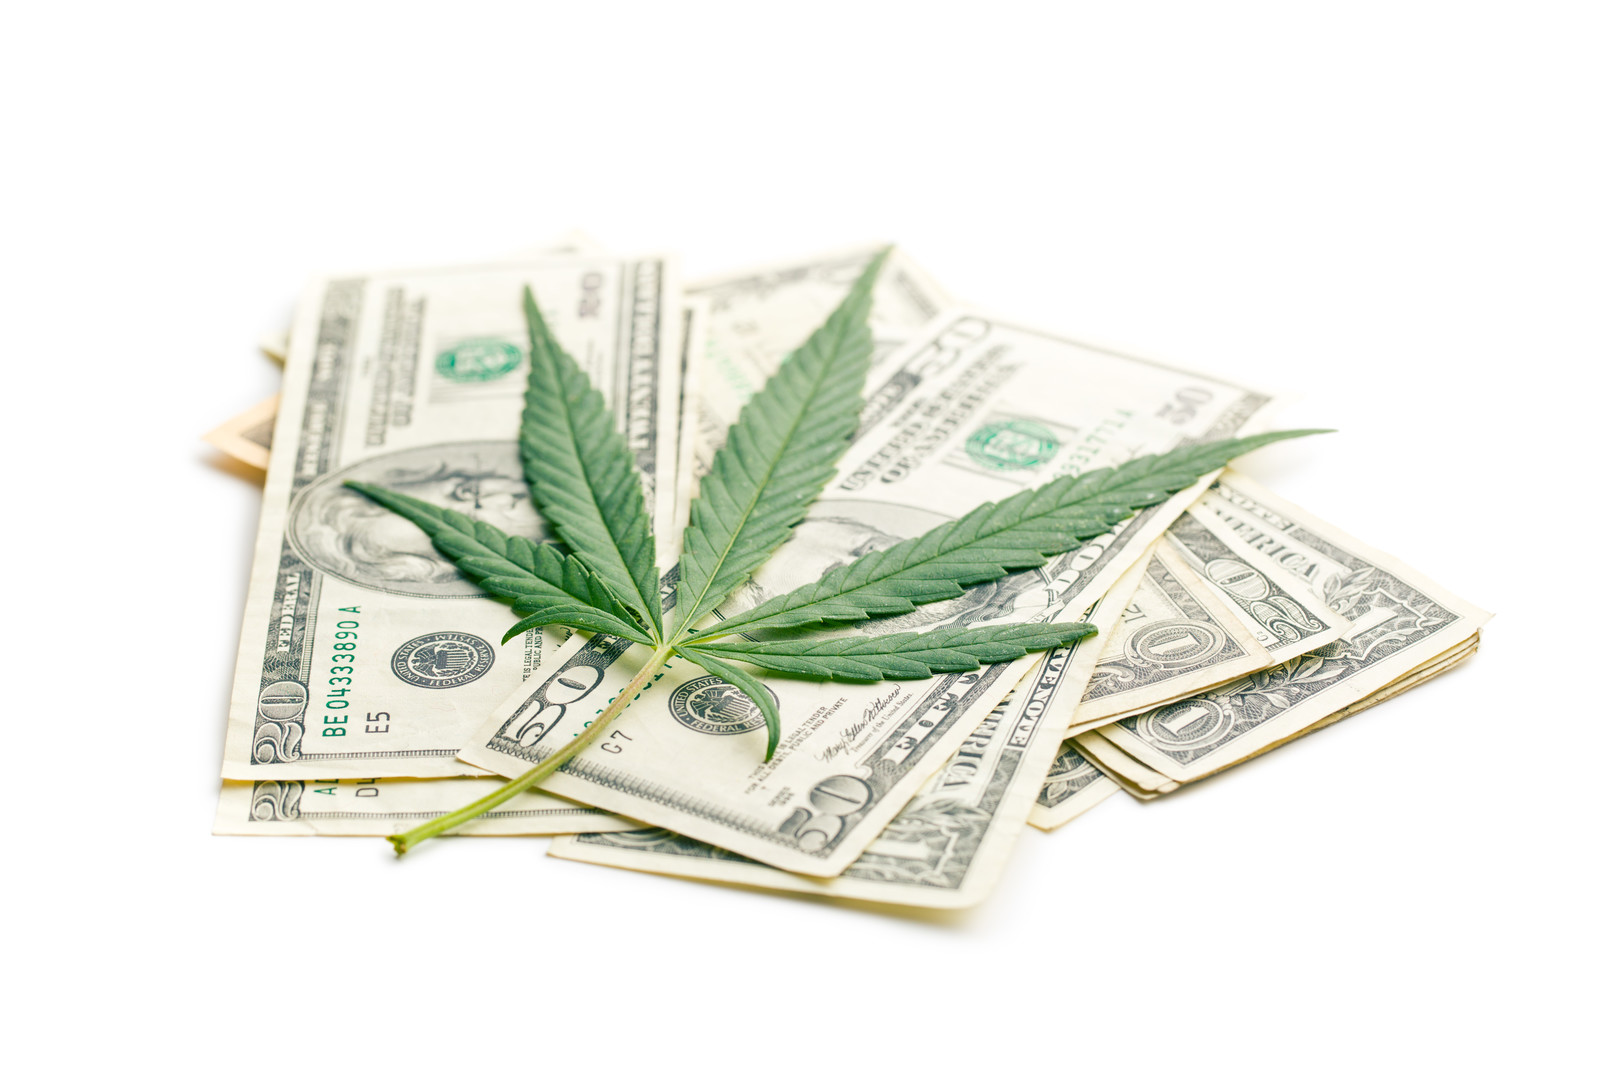 Methods for buying pot. Marijuana leaf on a pile of money.